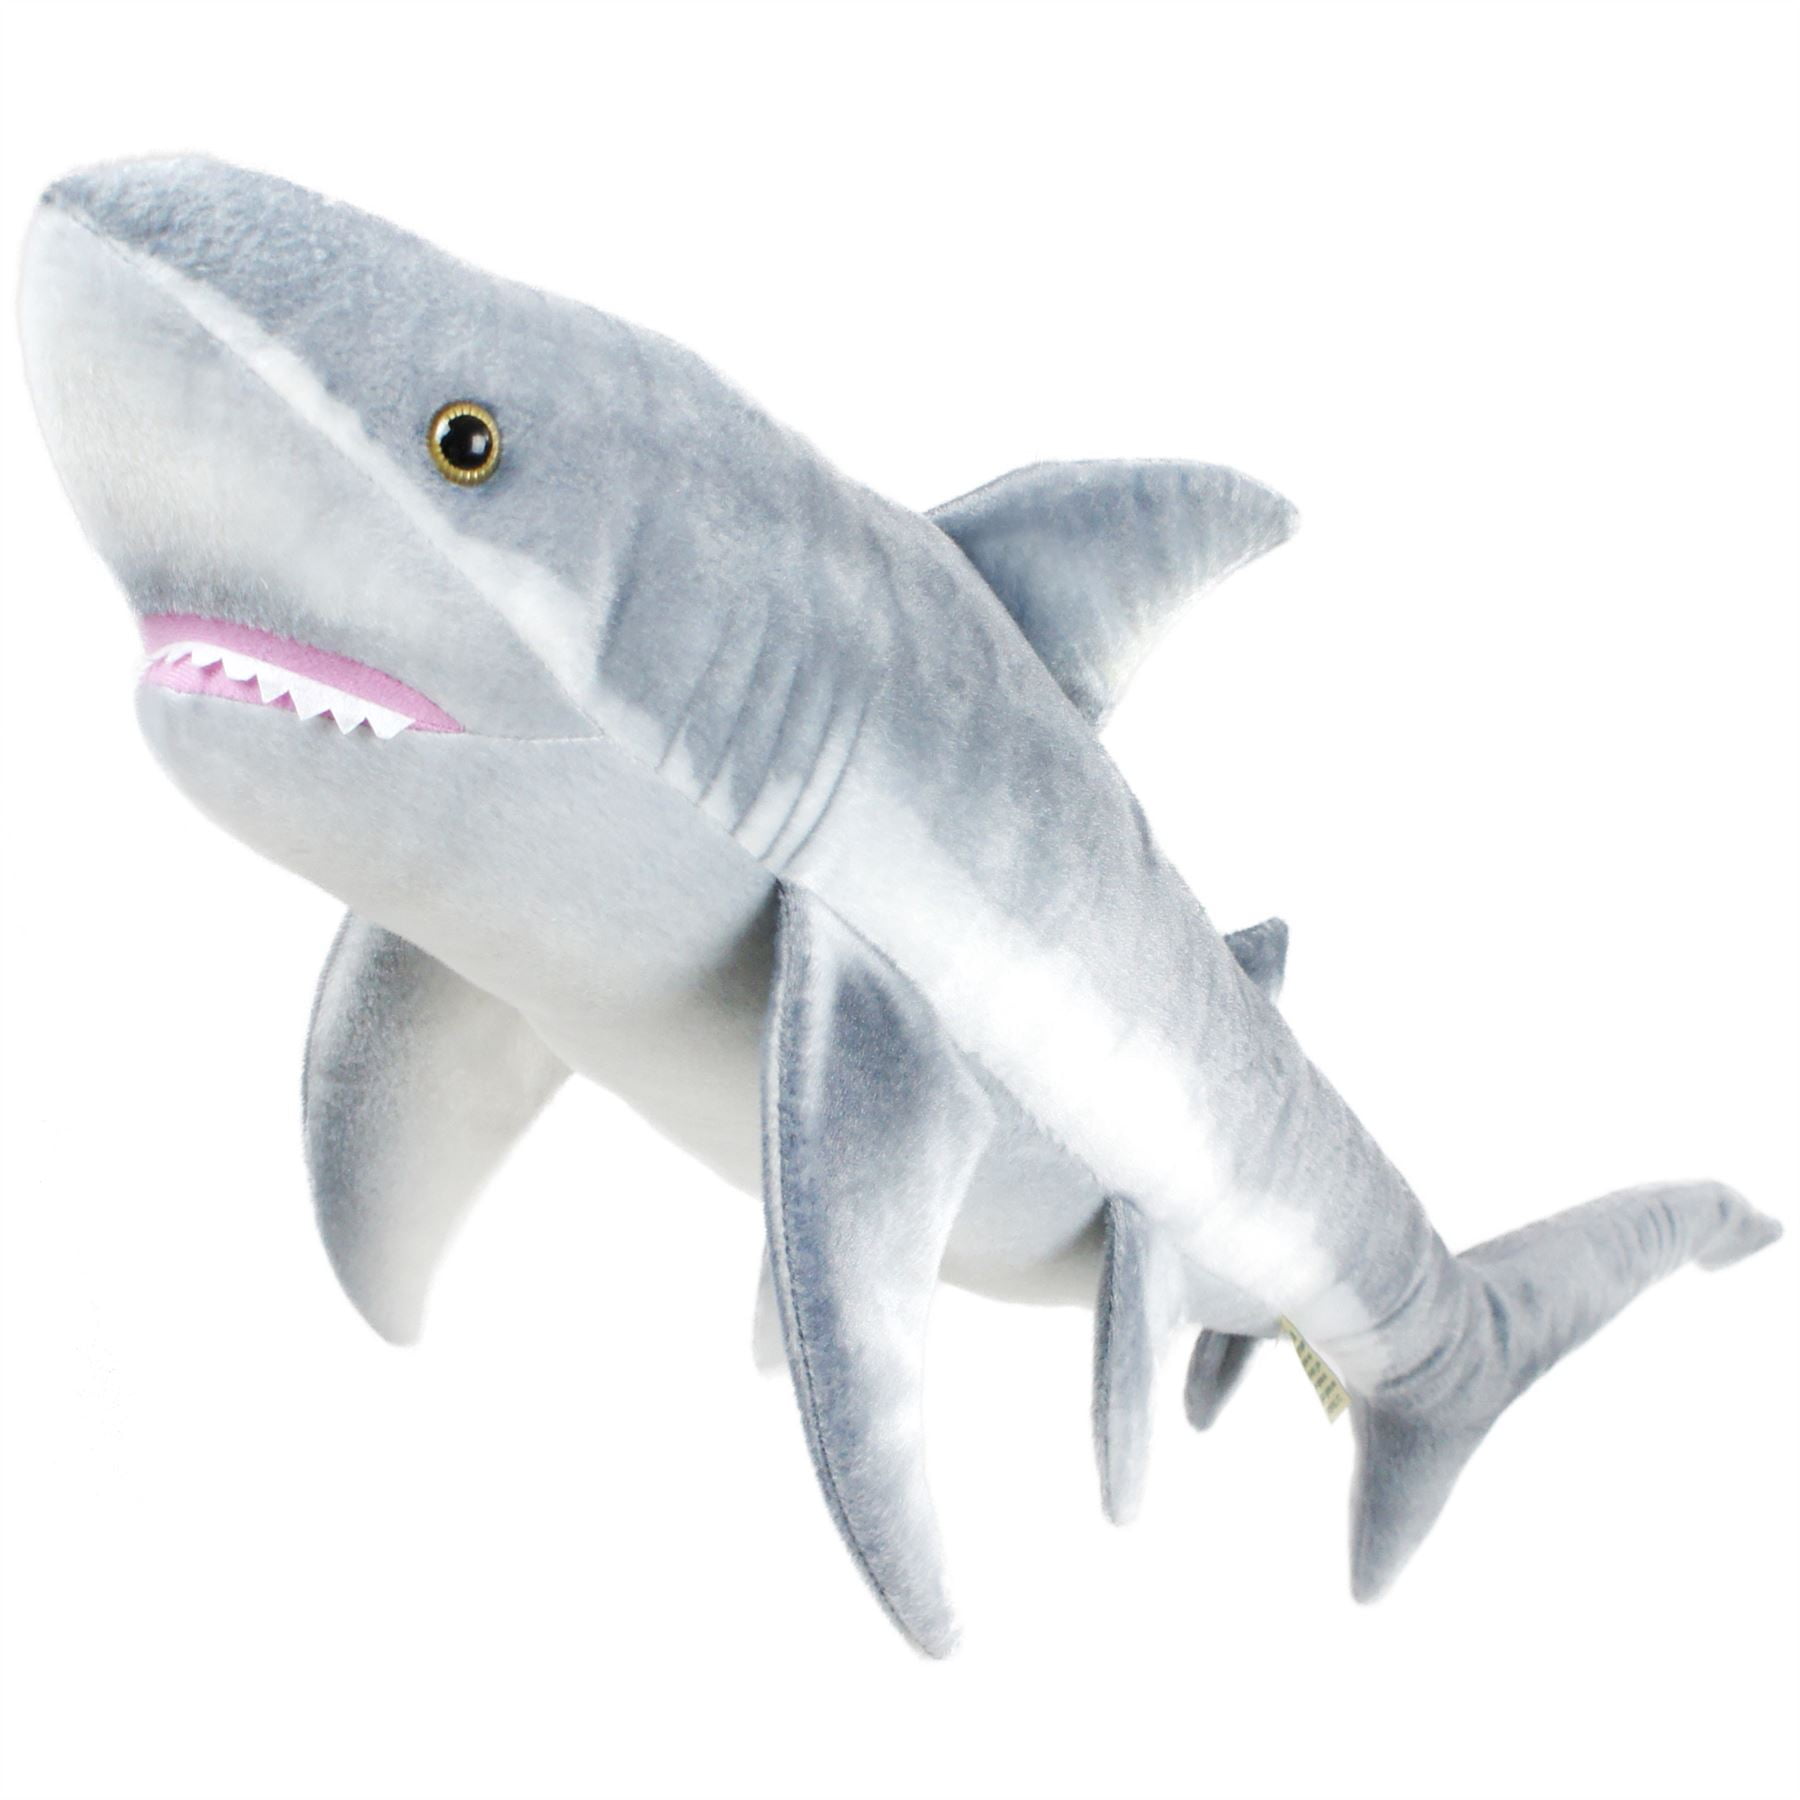 Shark Games Week - 100%ing Shark! Hunting the Great White 